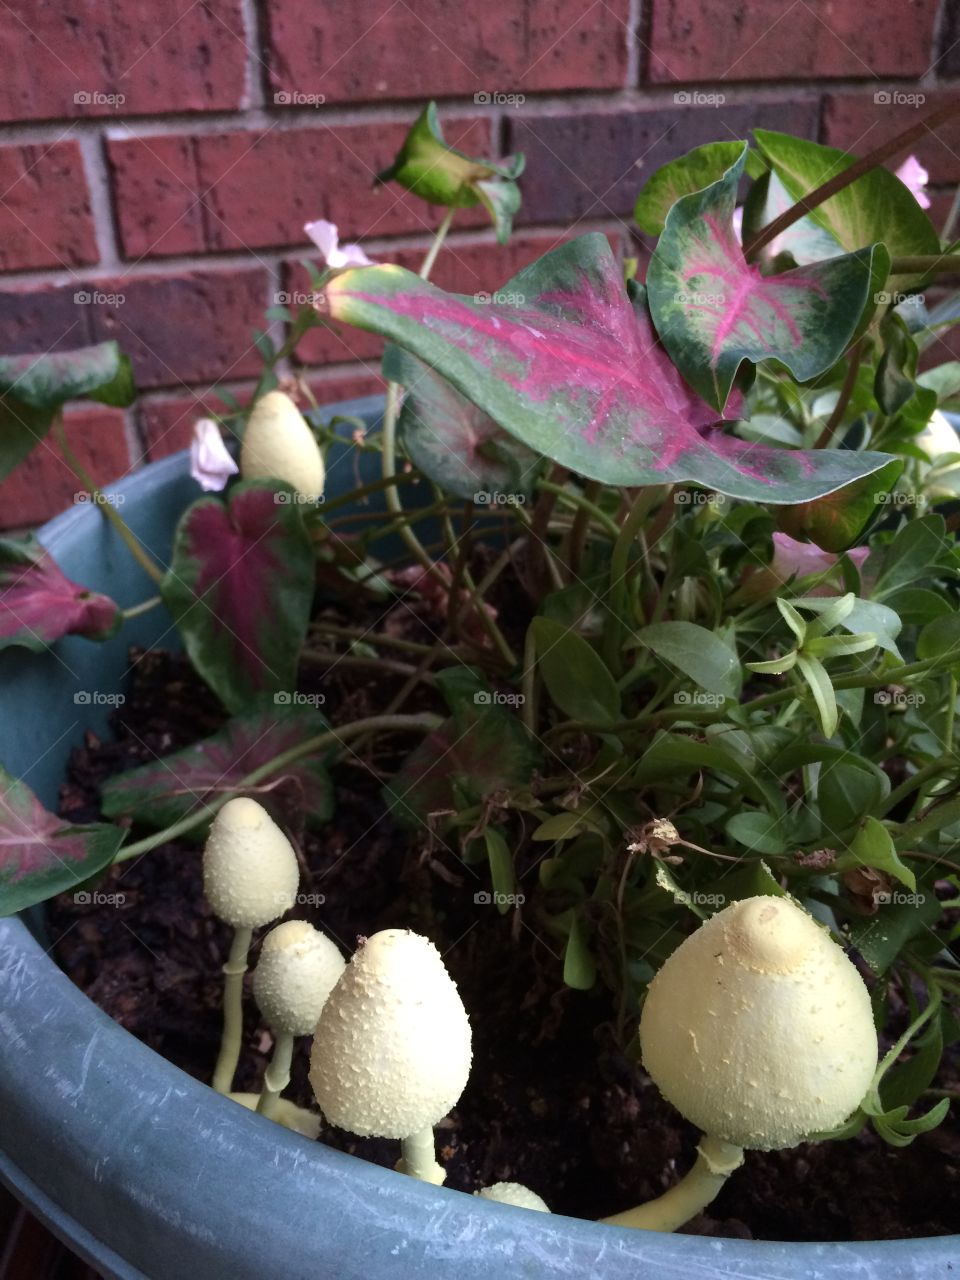 Strange Mushrooms . Found these mushrooms in my flower pot 